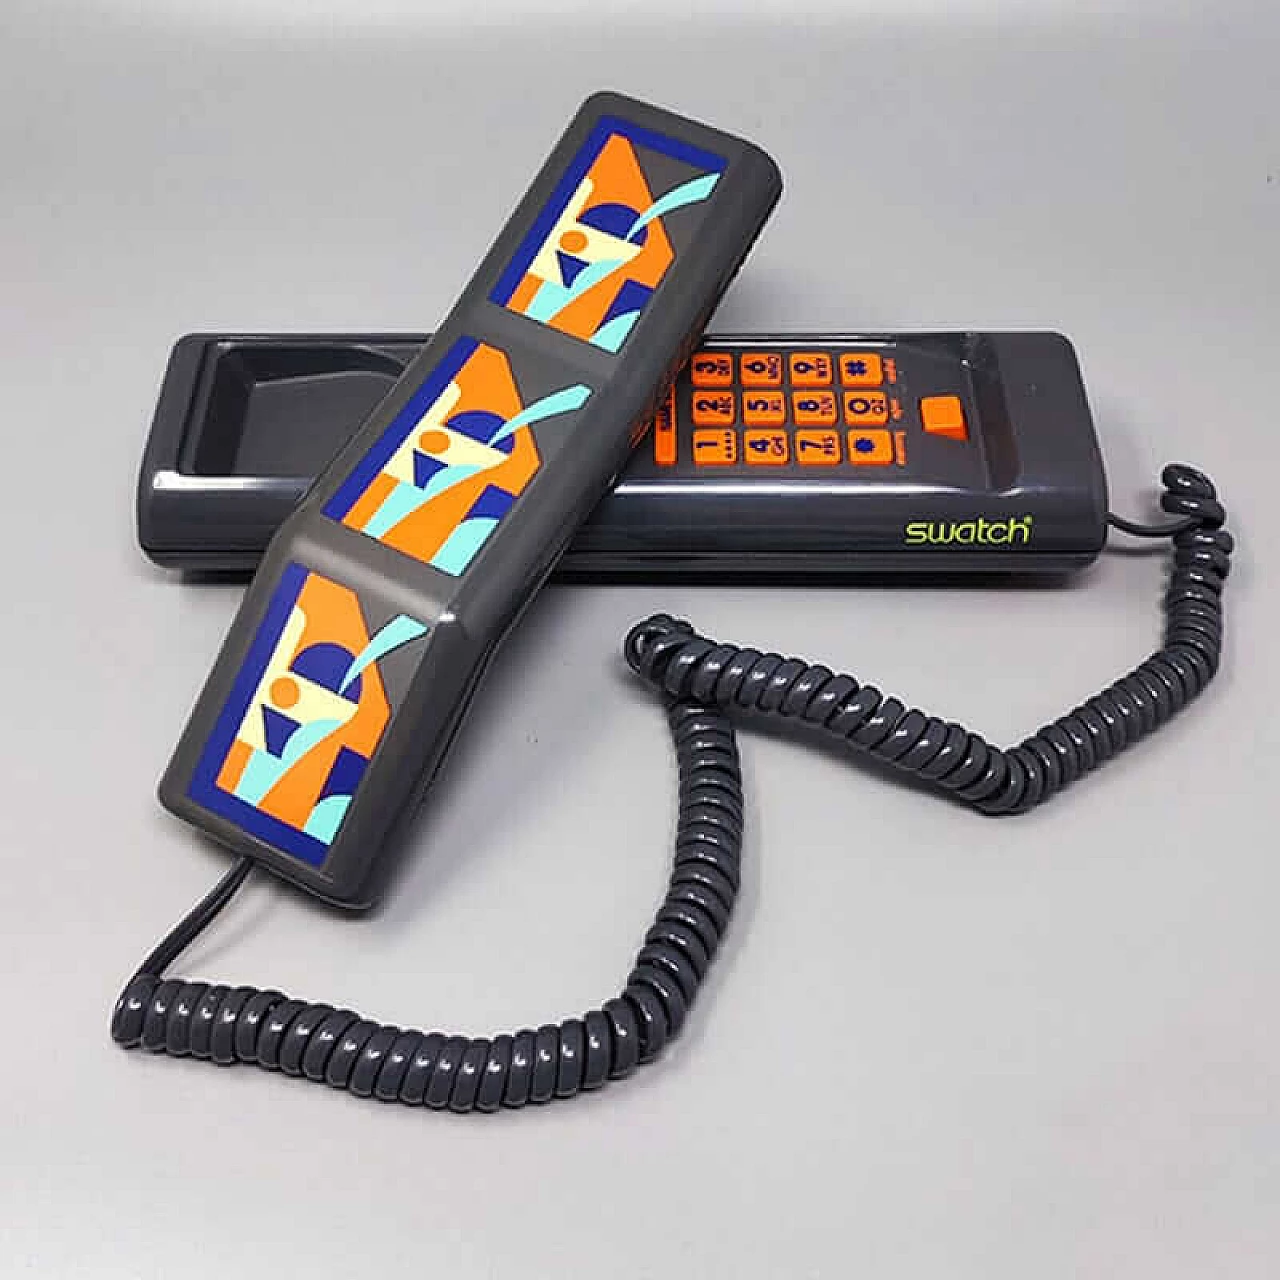 Deco Swatch Twin Phone landline phone, 1980s 5